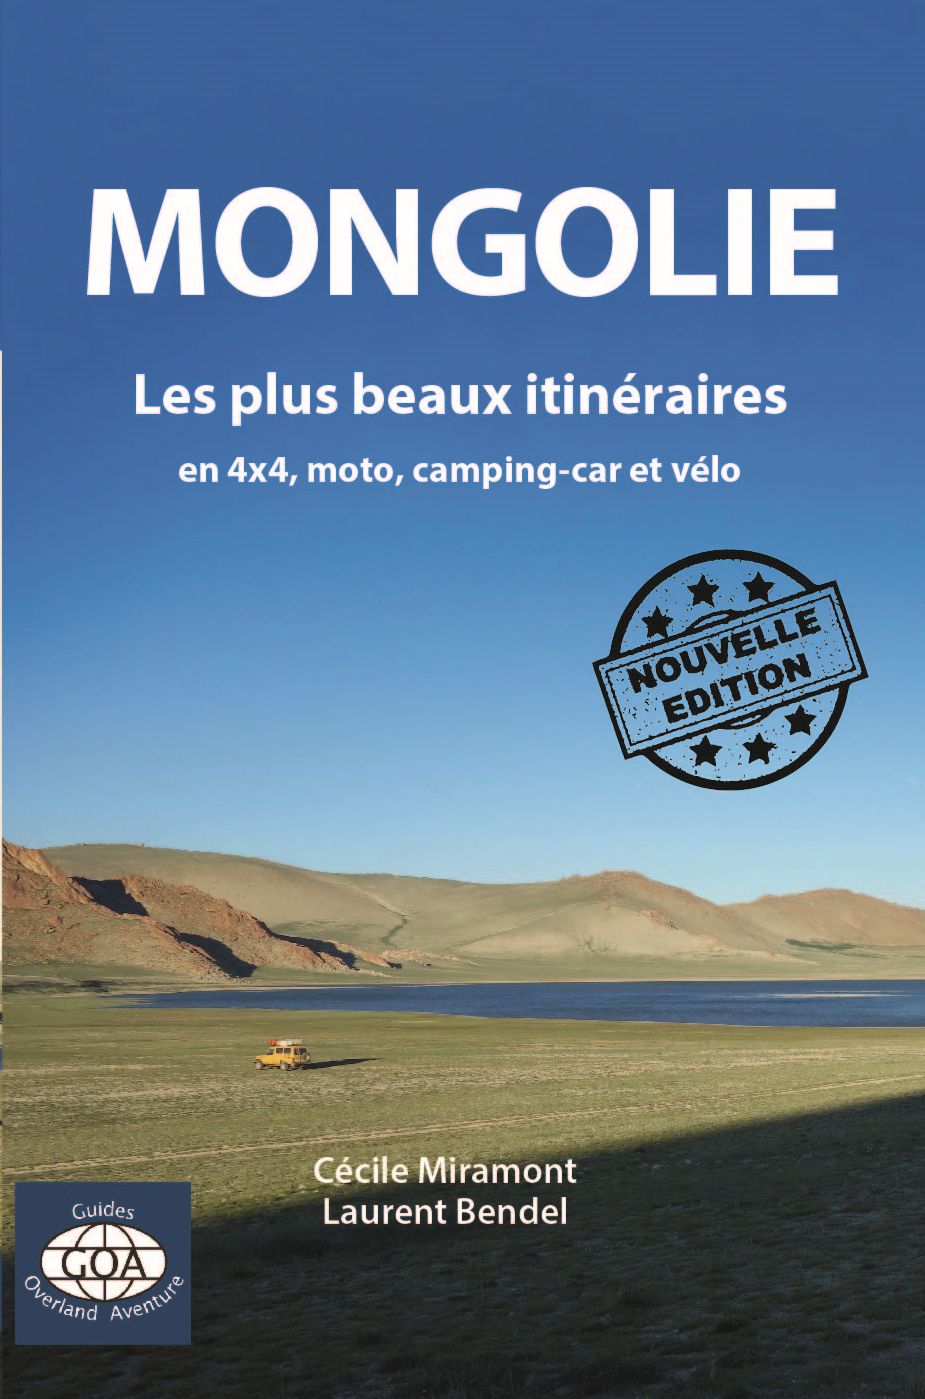 voyage en mongolie avis